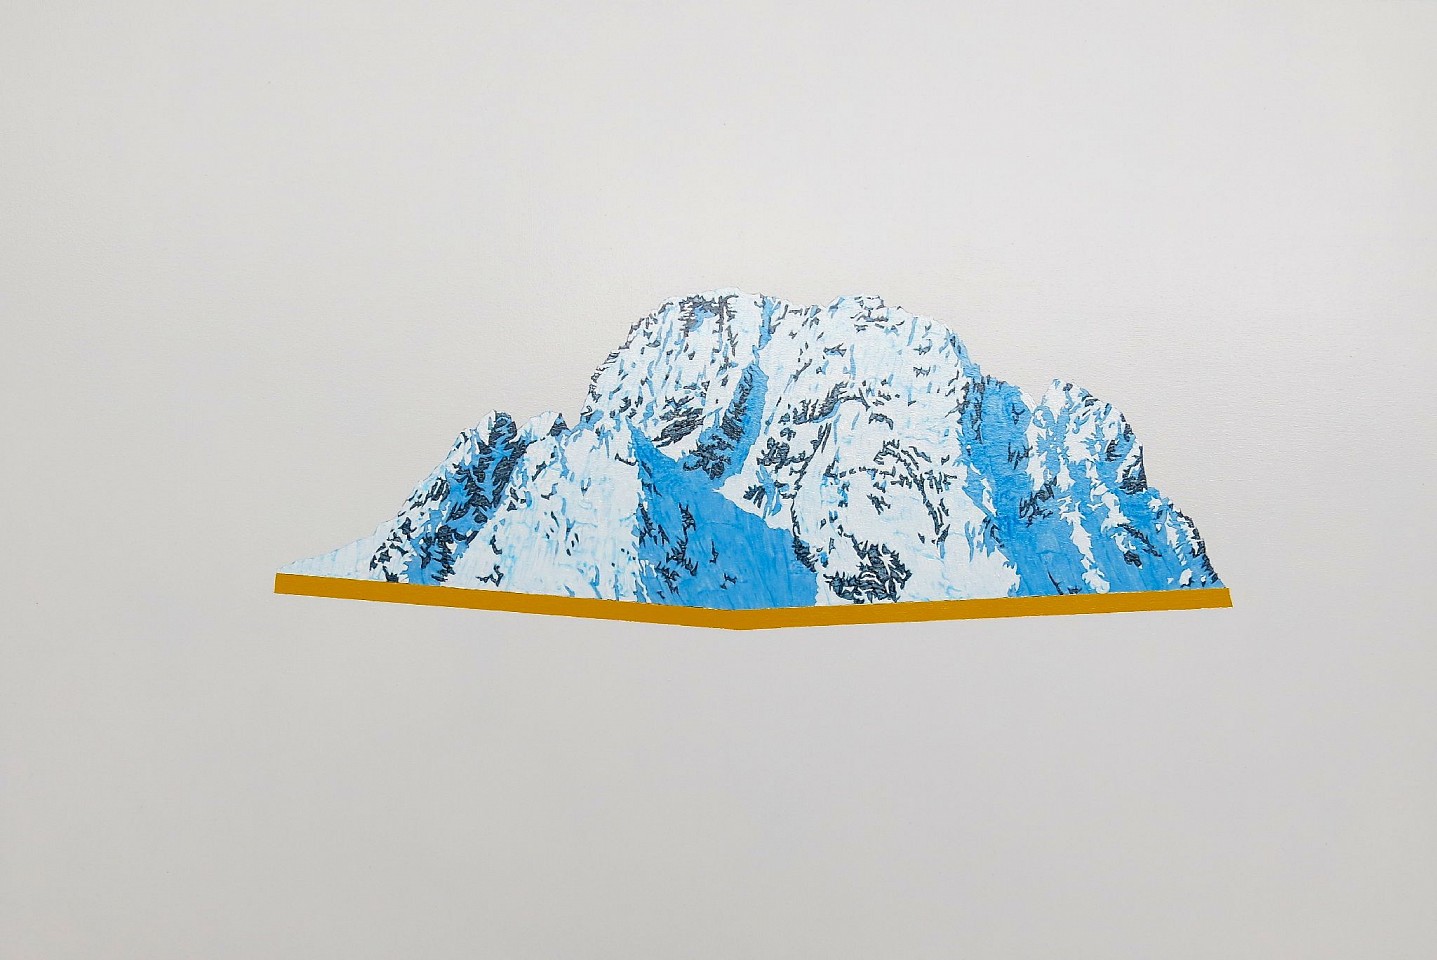 David Pirrie, Still Life With Mtn, Mt Moran Mid Winter, 2018
Oil on Panel, 24 x 36 in. (61 x 91.4 cm)
6839